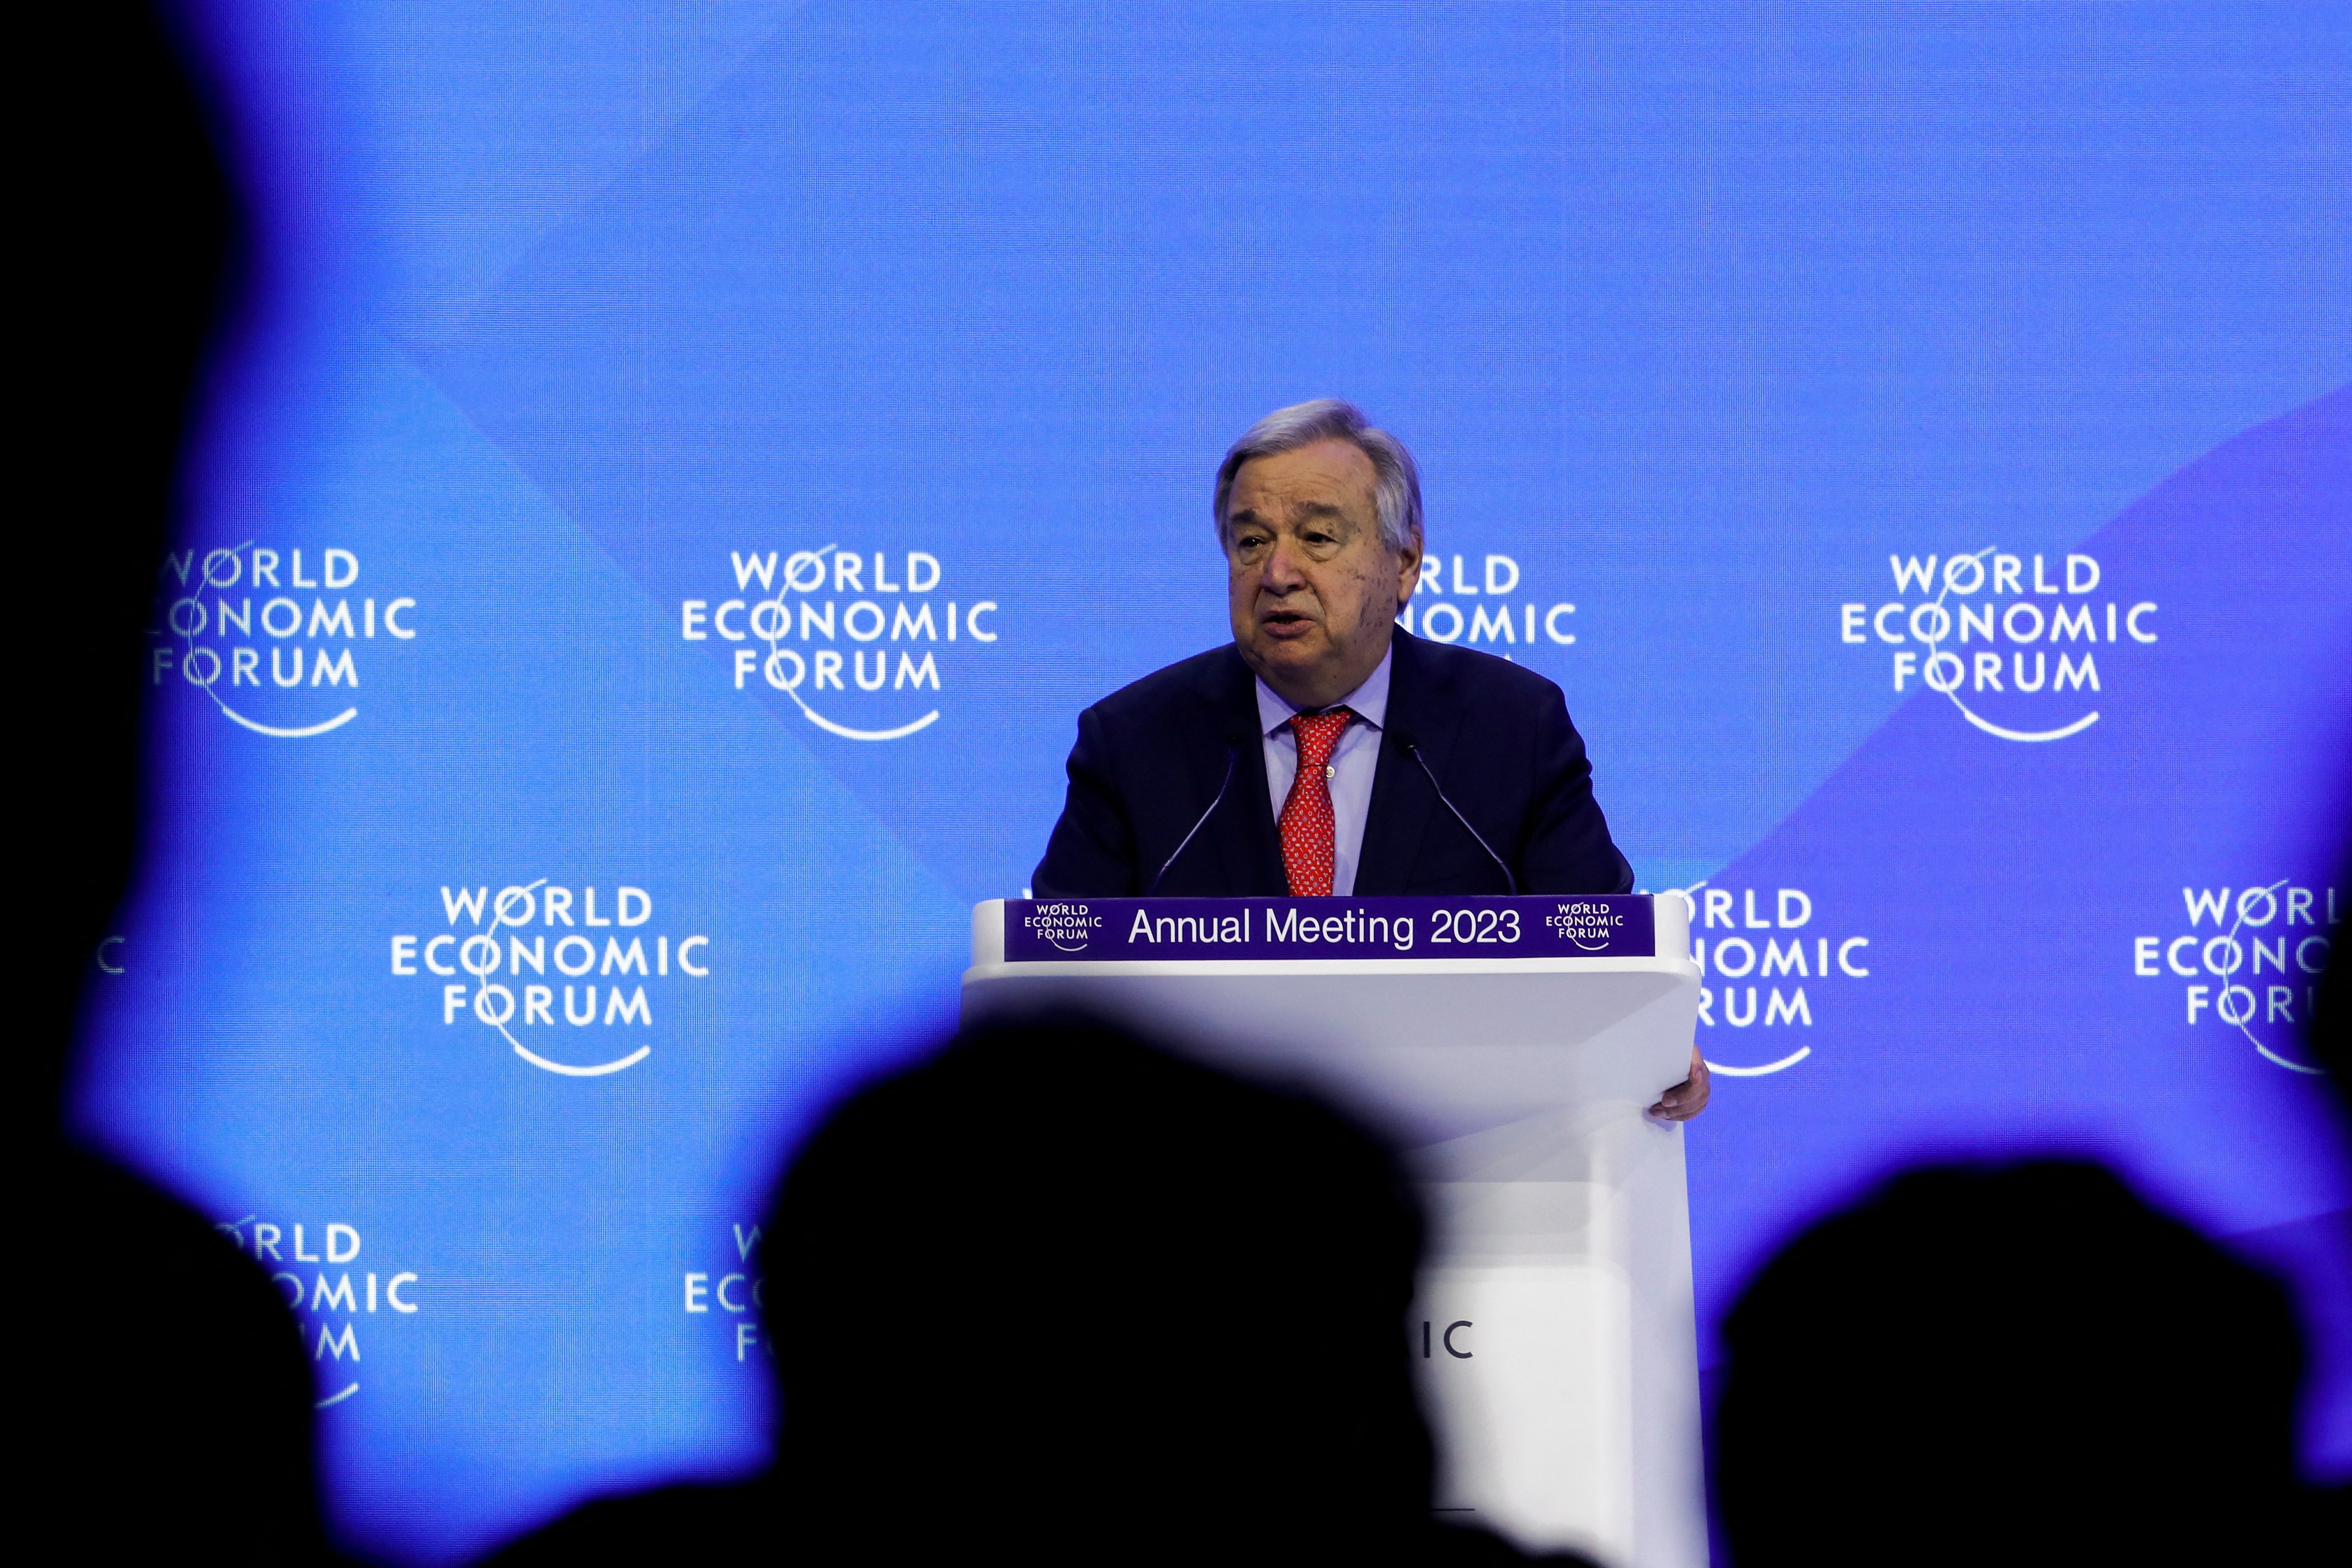 United Nations Secretary-General Antonio Guterres addresses the World Economic Forum (WEF), in Davos, Switzerland, January 18, 2023. REUTERS/Arnd Wiegmann